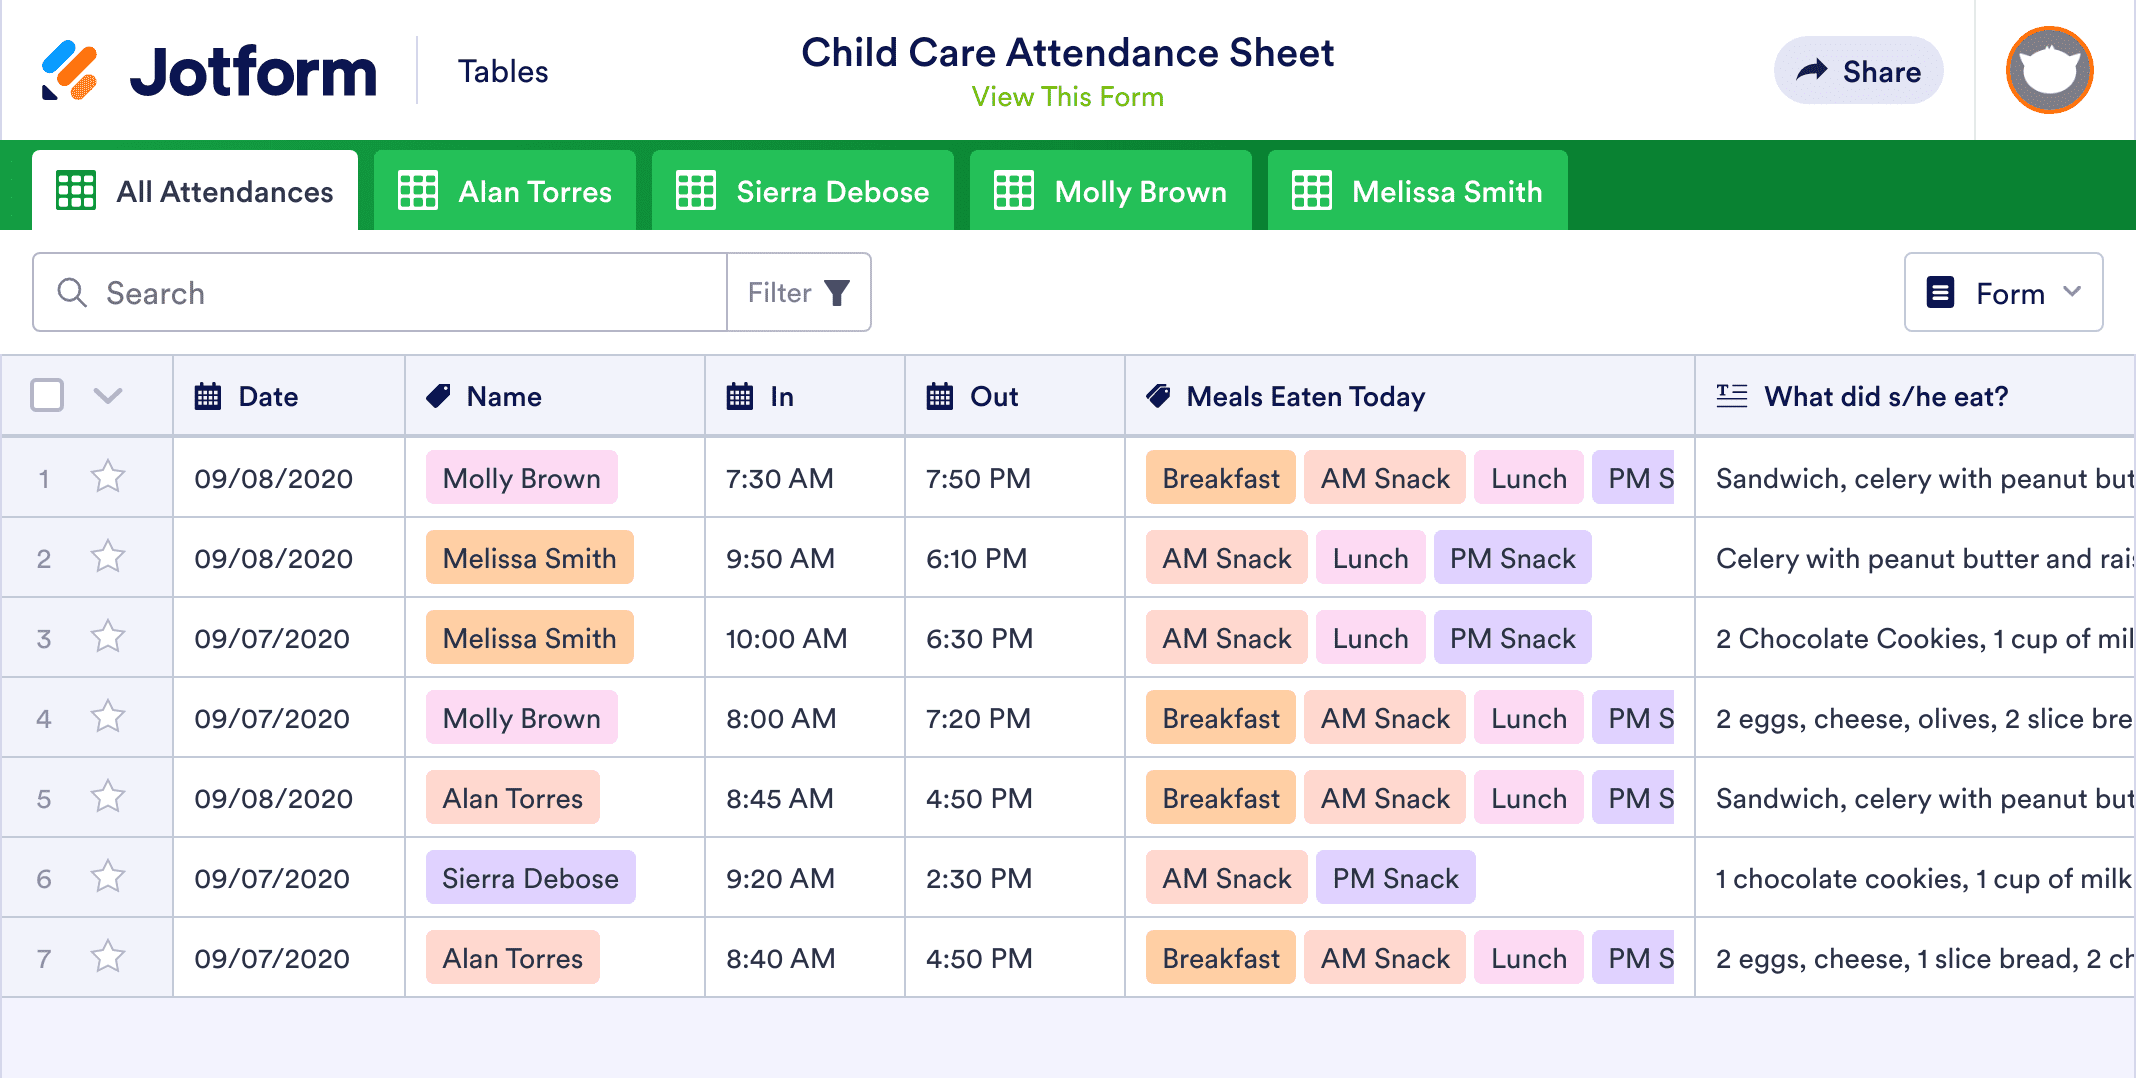 Child Care Attendance Sheet